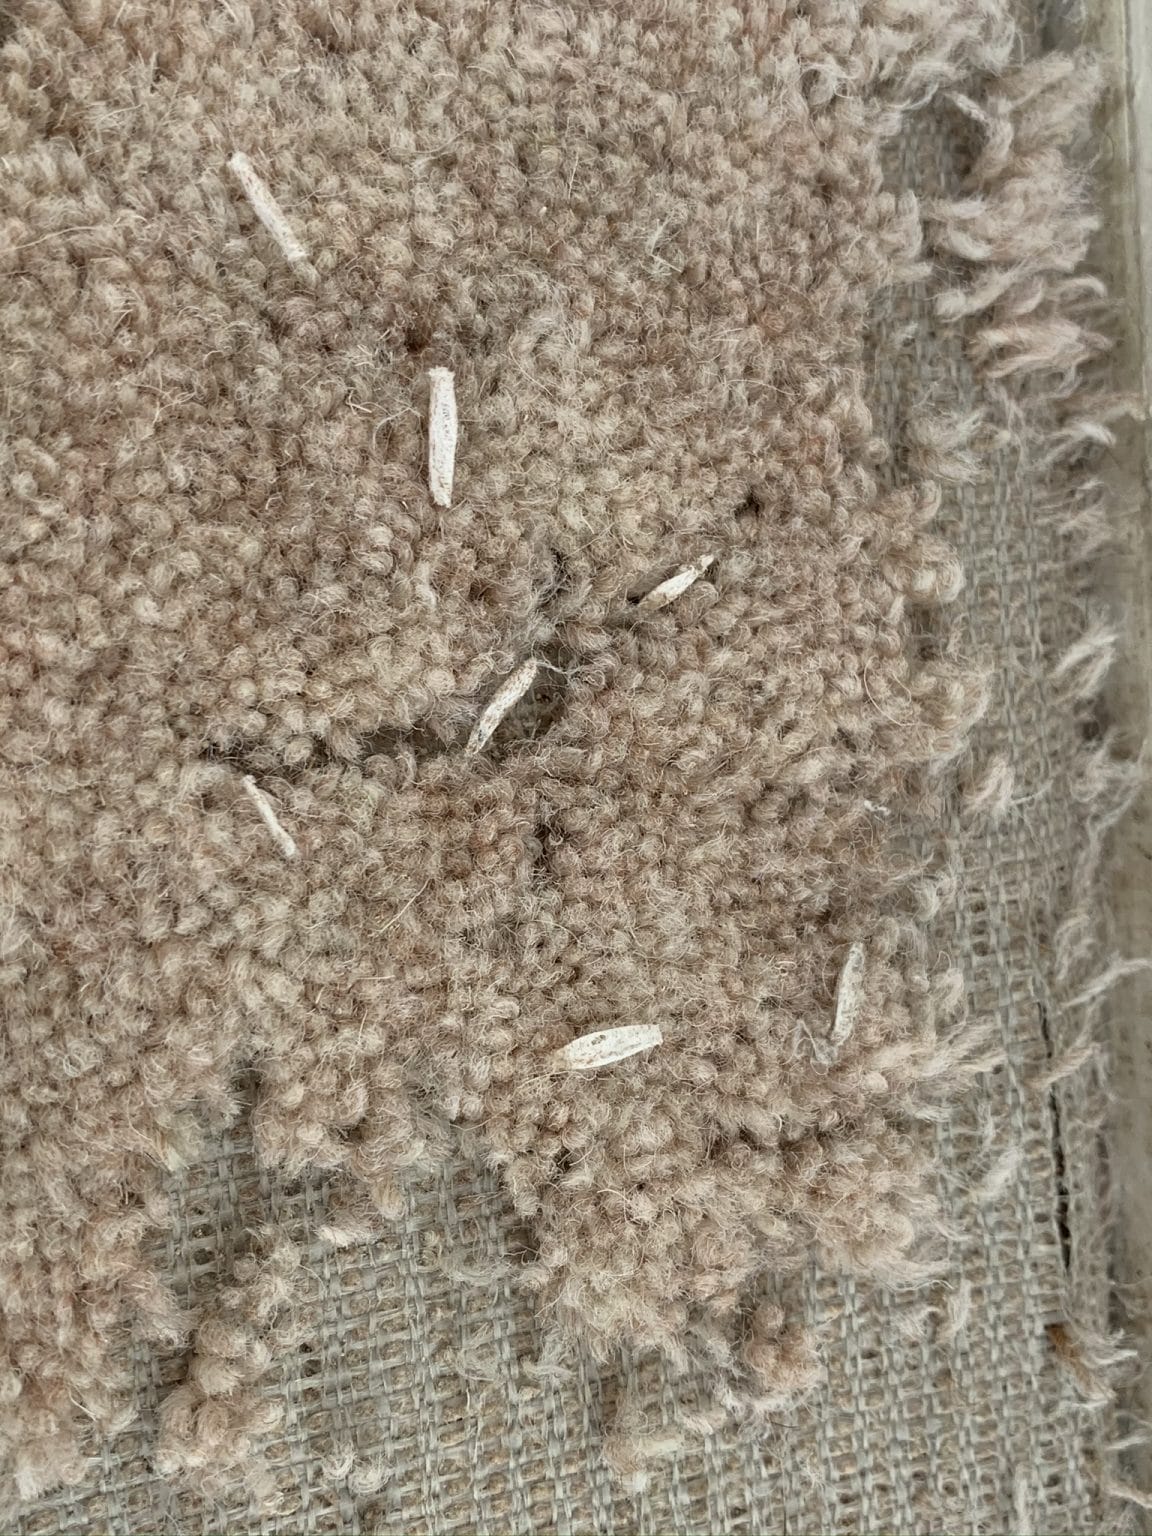 Are Carpet Moths The Same As Clothes Moths? • Pest-Tech • Carpet Moth